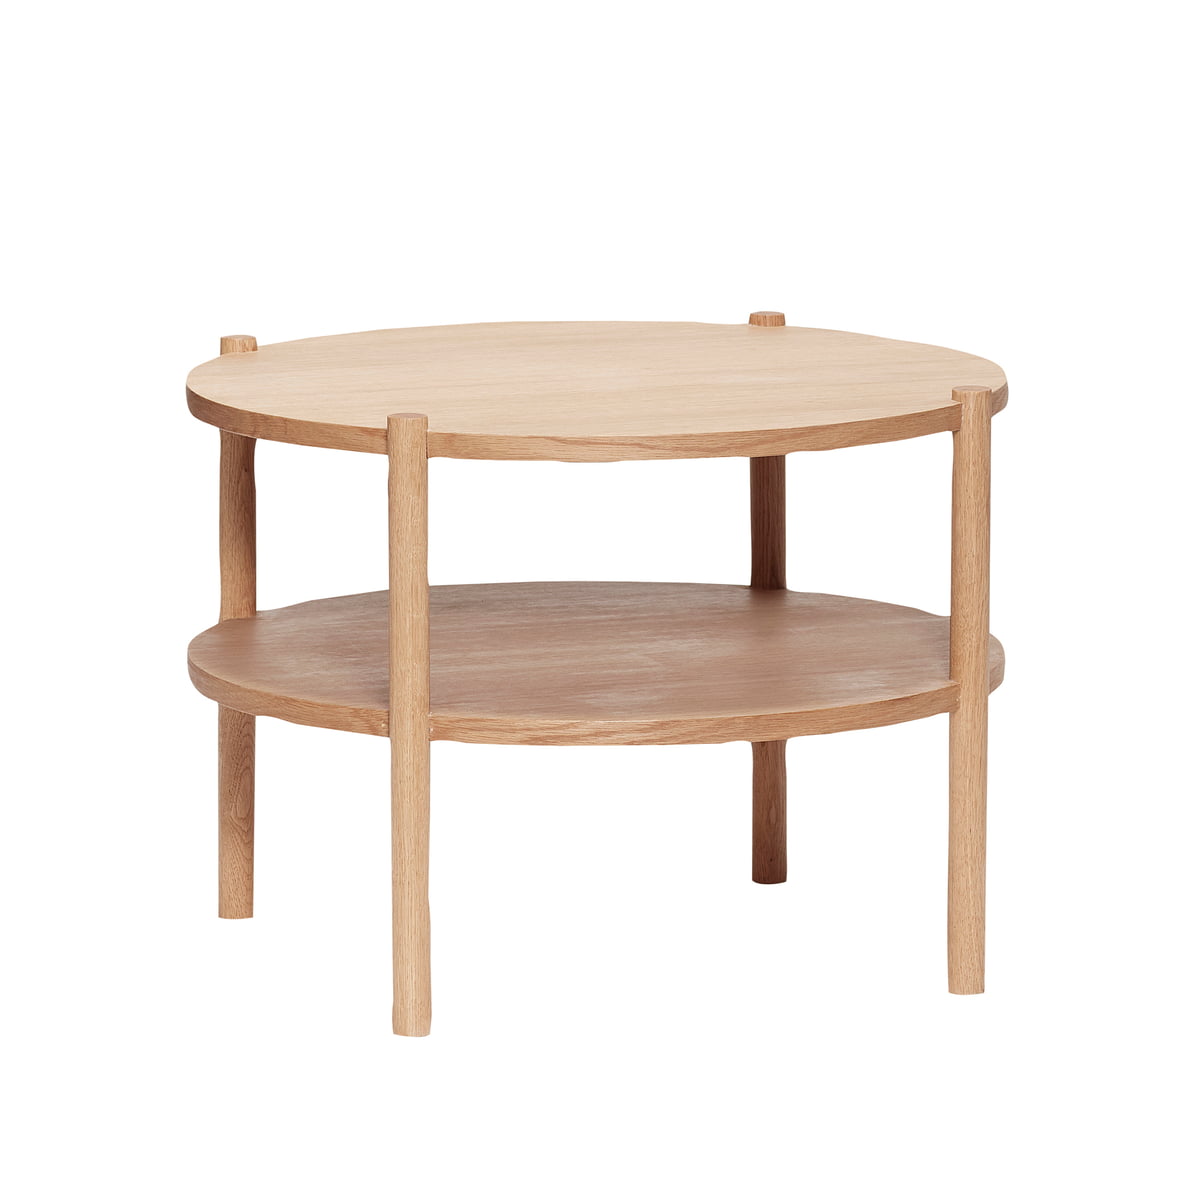 Hübsch Interior Round Coffee Table, 30 Round Coffee Table With Shelf